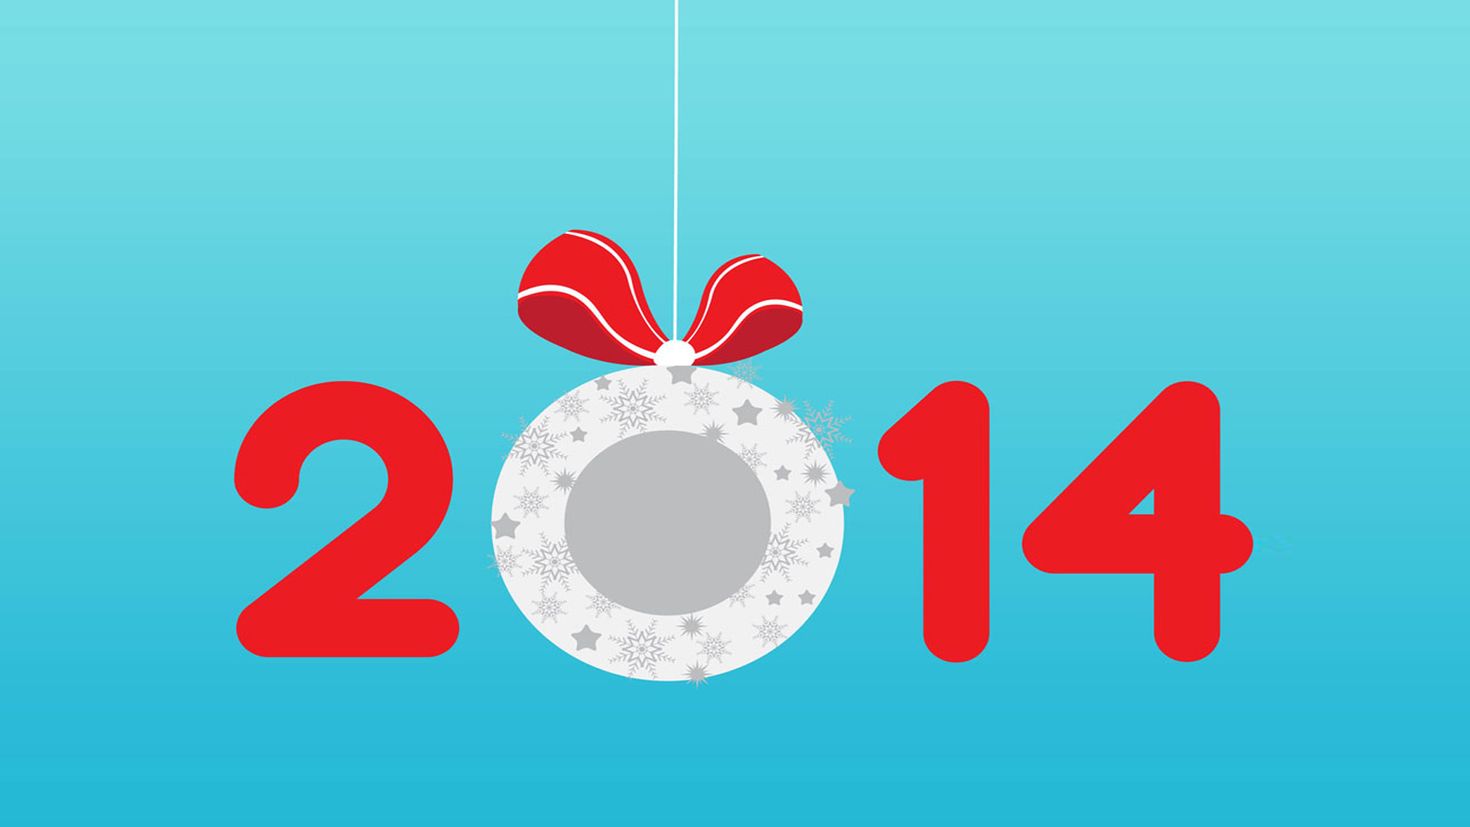 6 декабря 2014 год. 2014 Год картинка. Картинки 2014. Новый год 2014. Фон цифры.